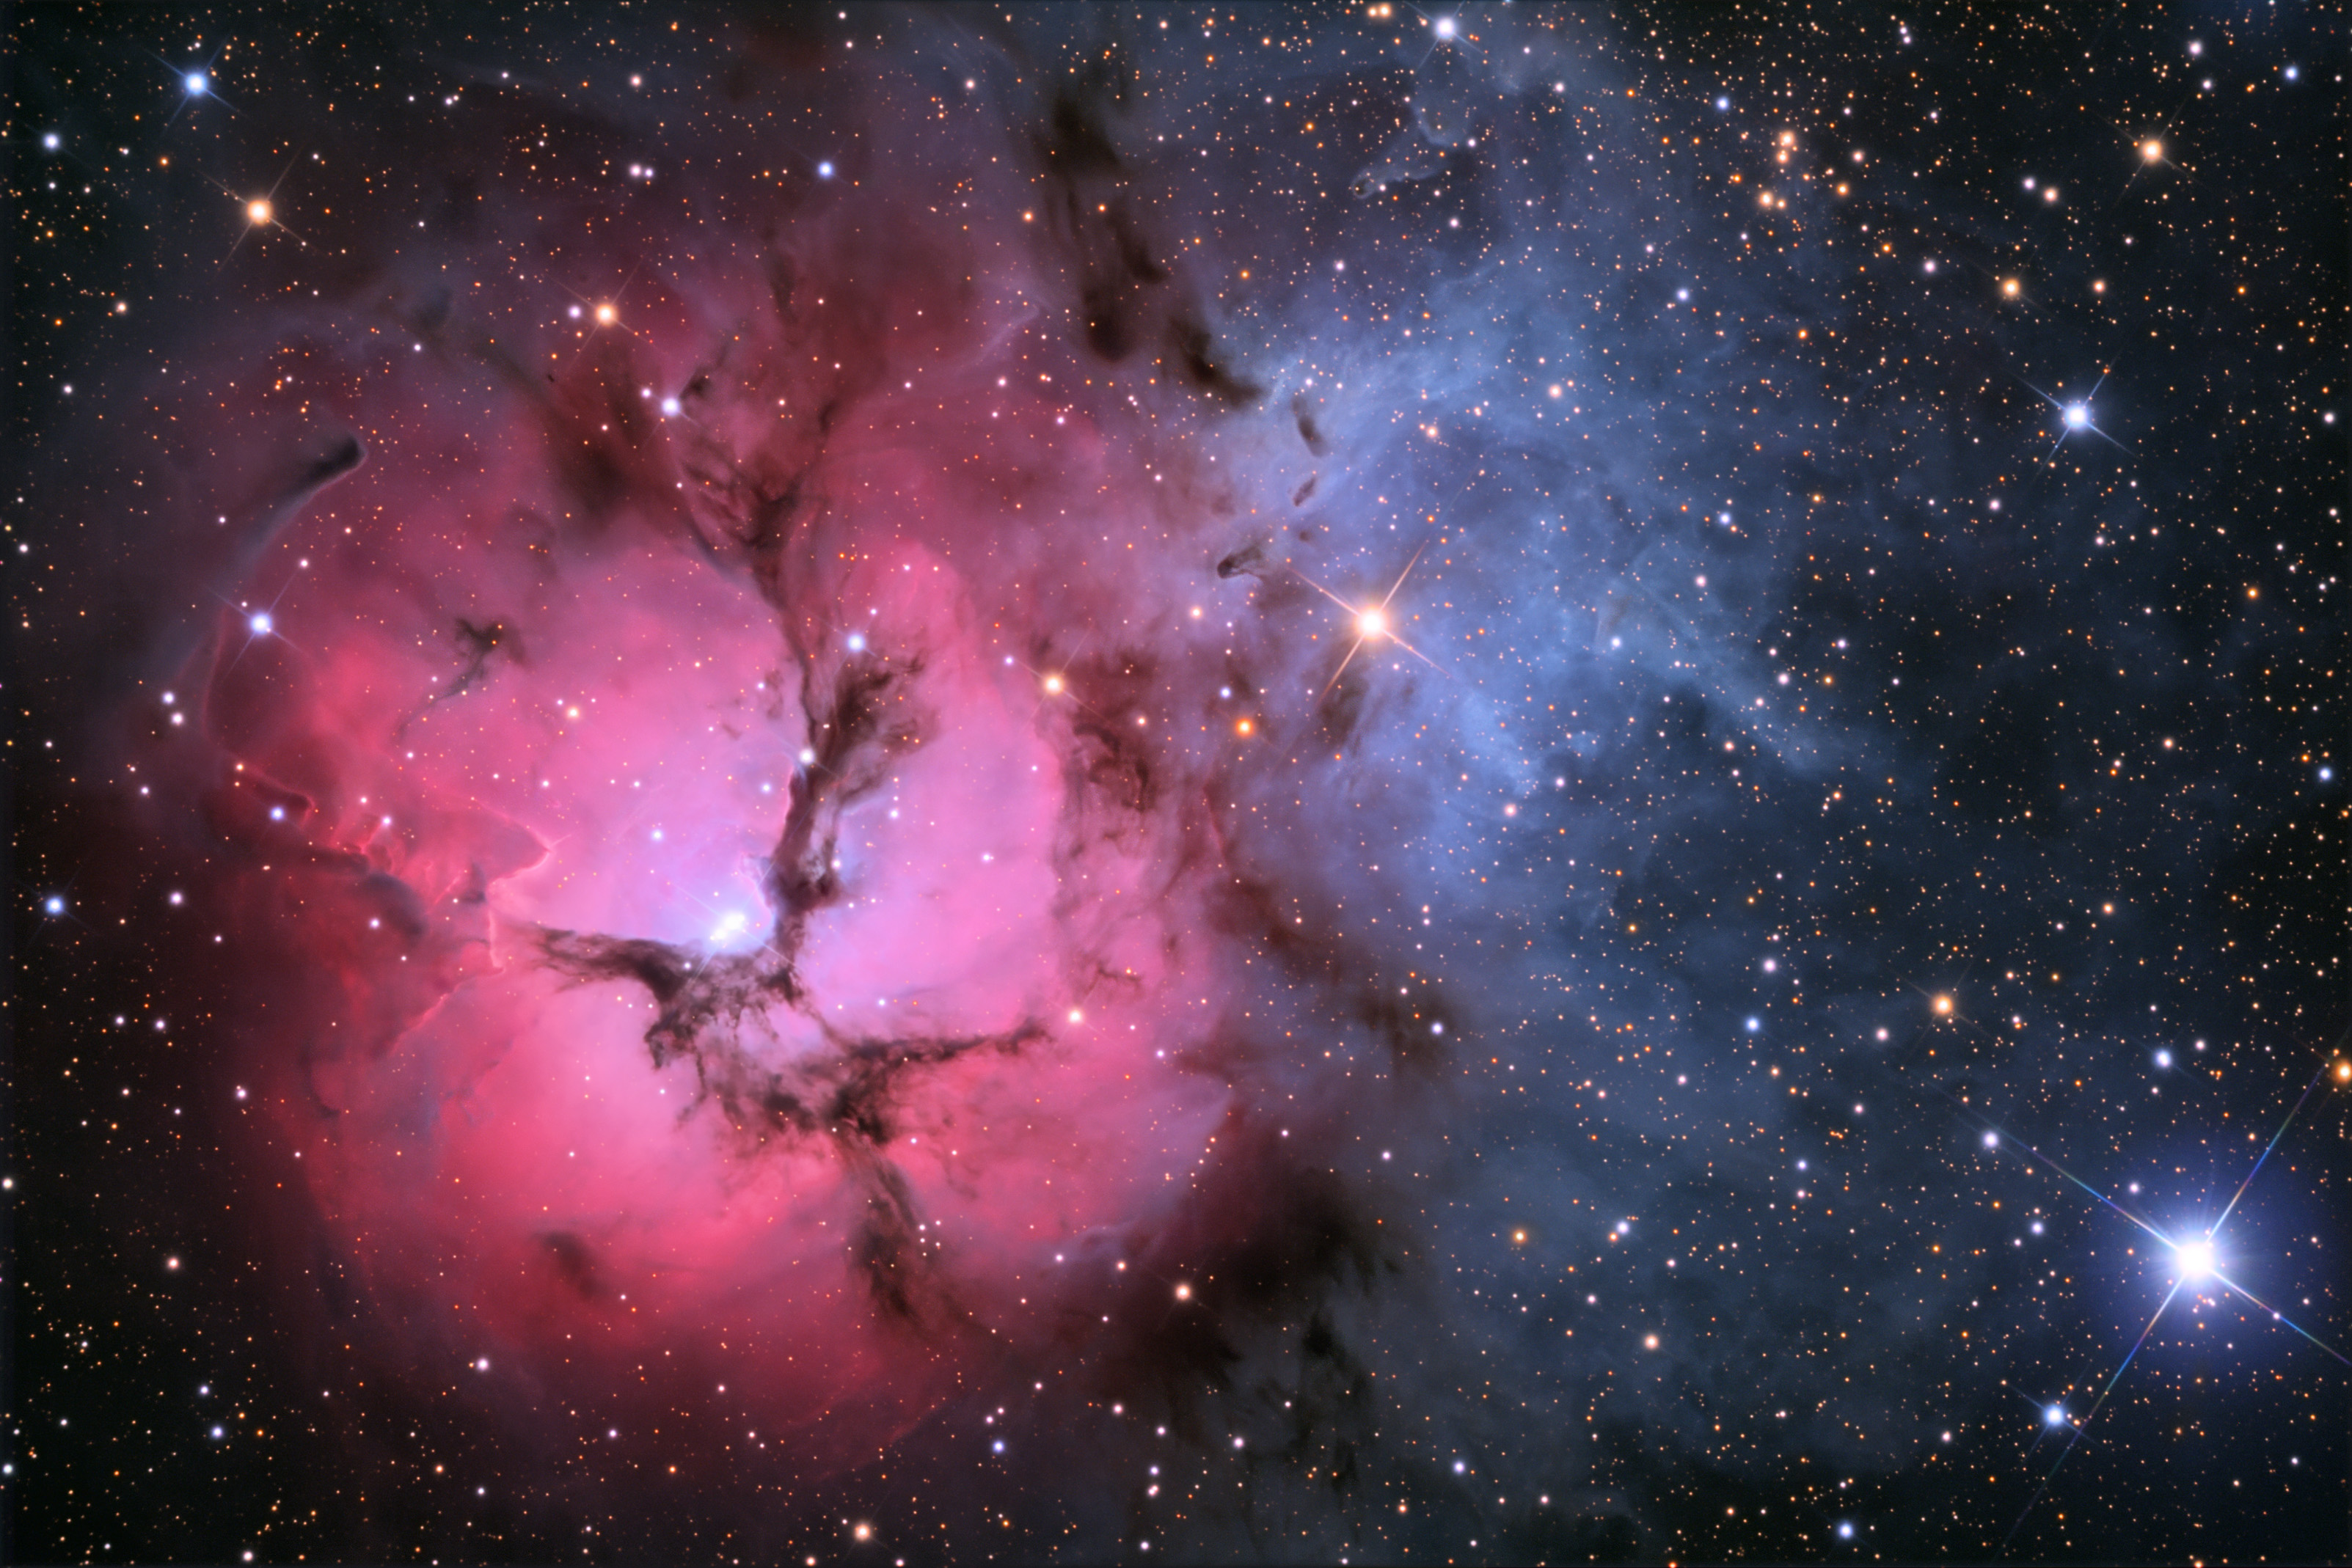 The Trifid Nebula in Stars and Dust